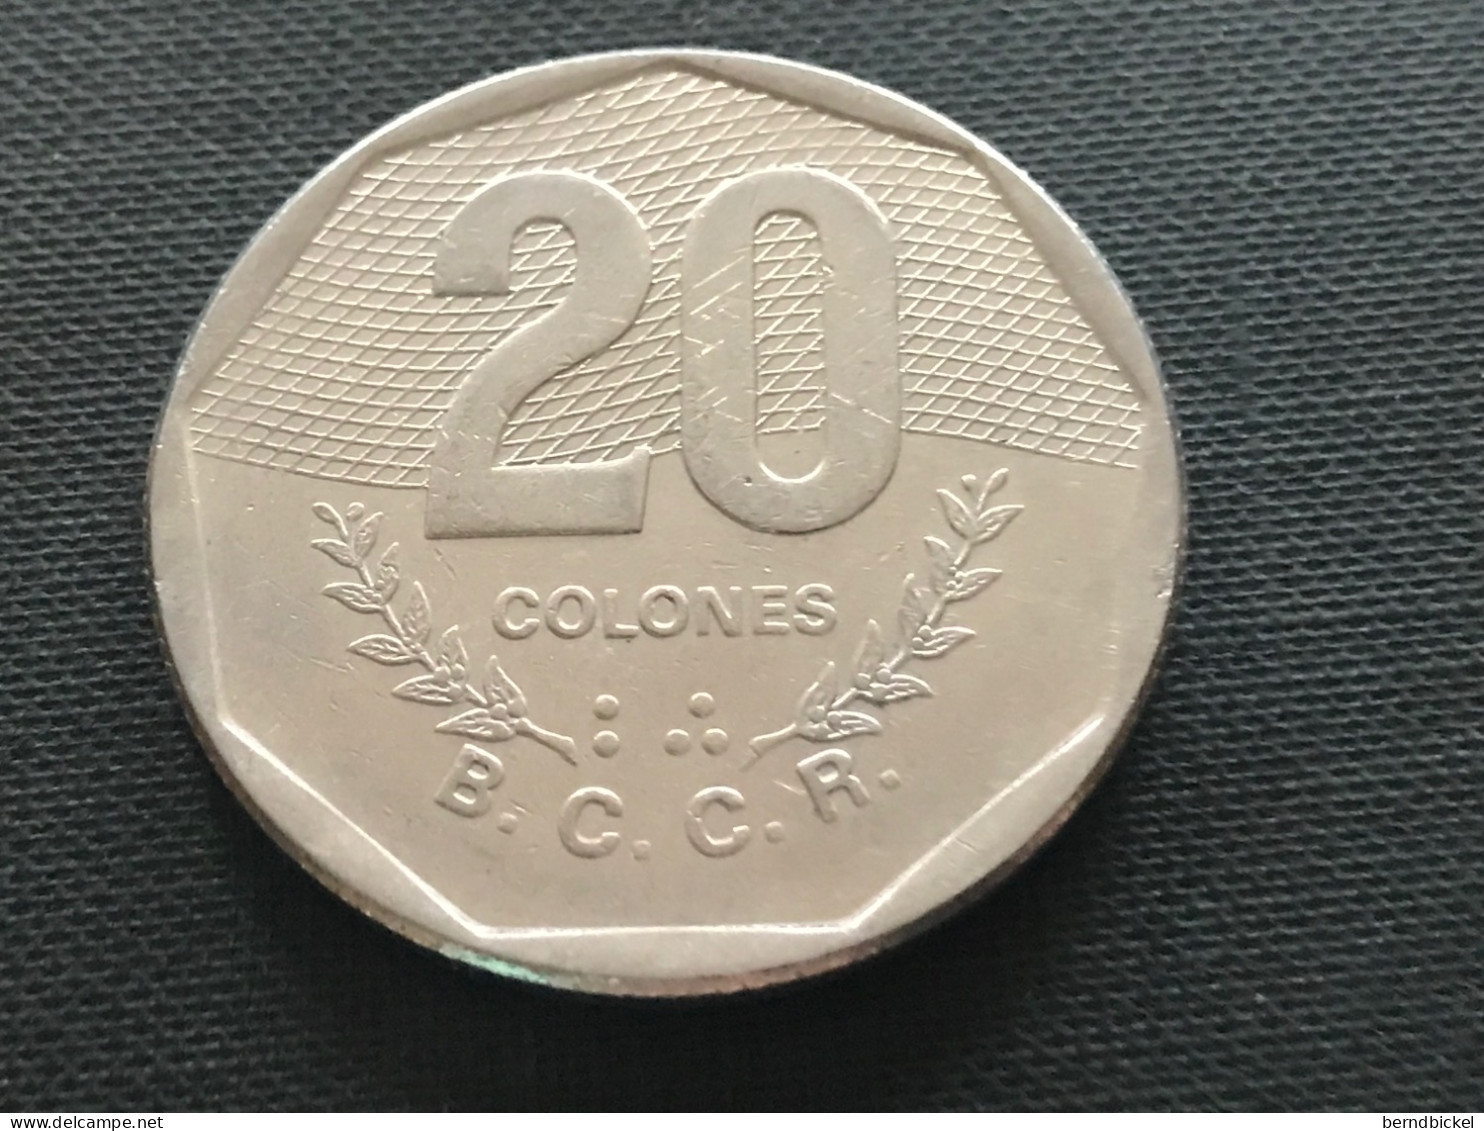 Münze Münzen Umlaufmünze Costa Rica 20 Colones 1985 - Costa Rica